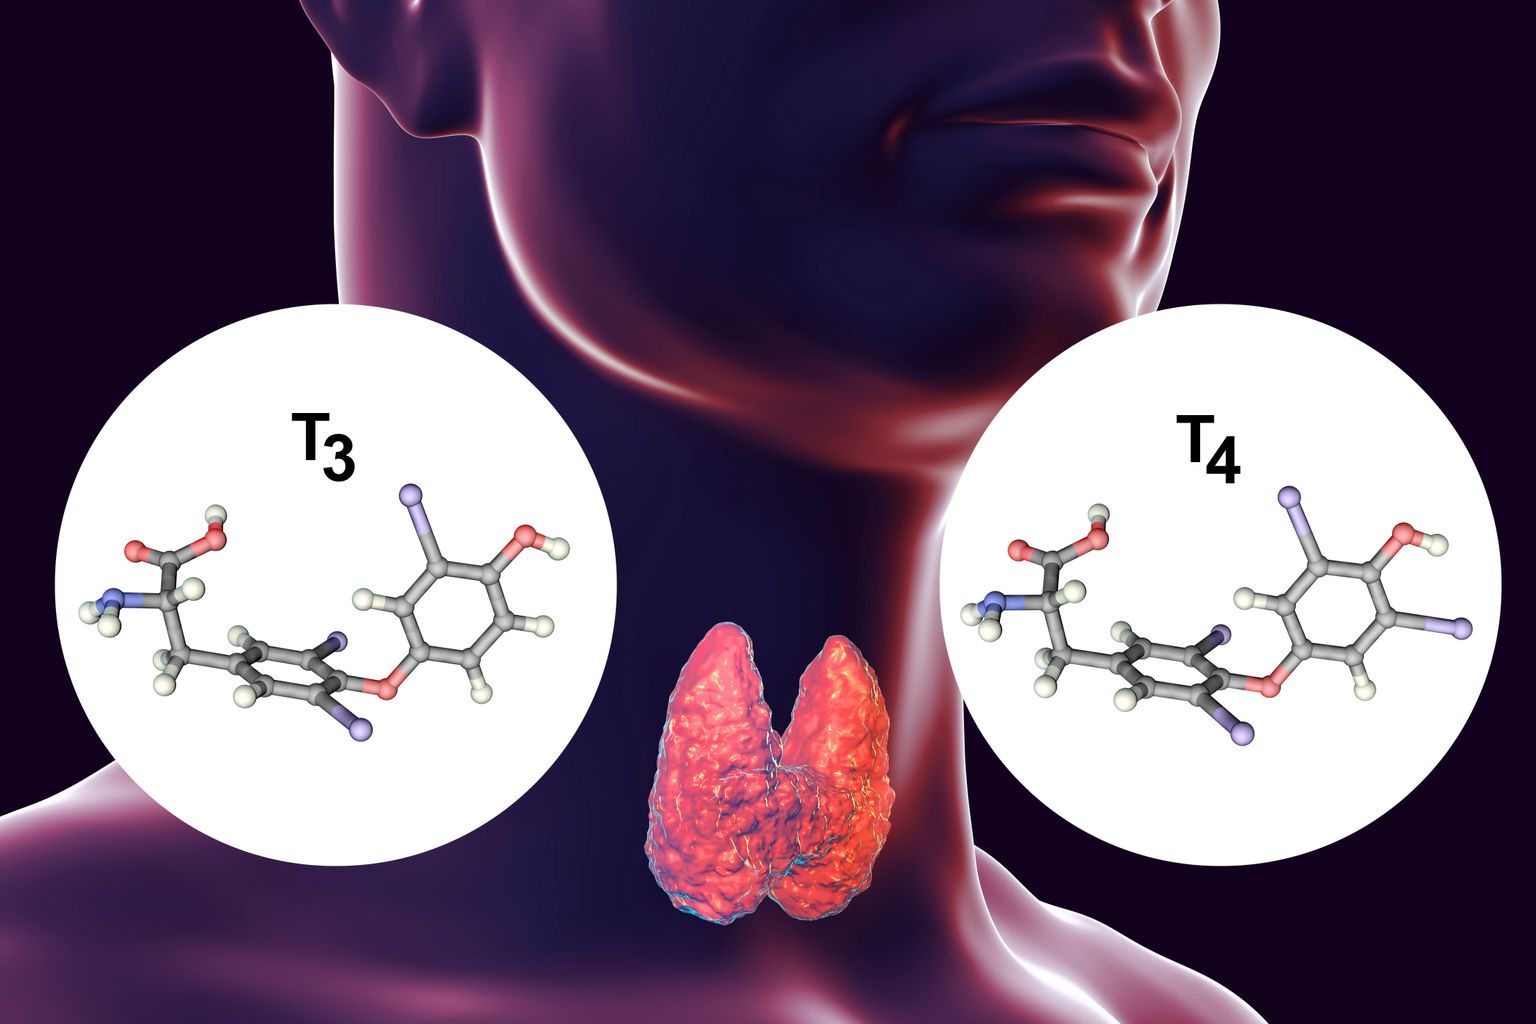 Thyroid hormones T3 and T4